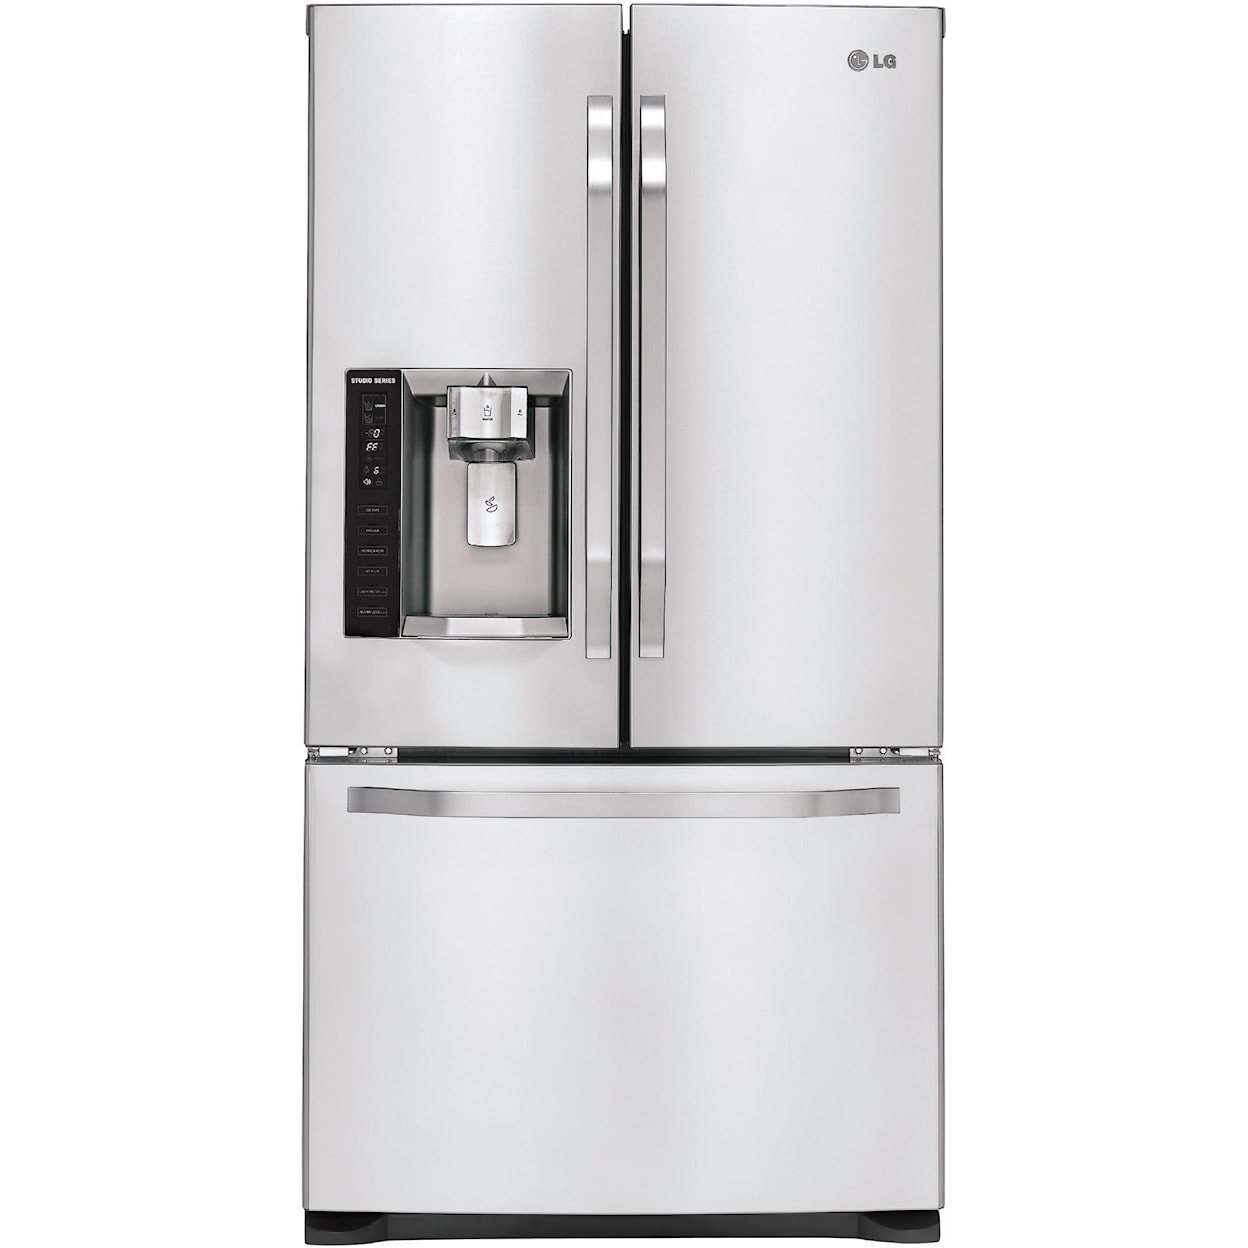 LG Appliances LG Studio Series 20.5 Cu. Ft. French Door Refrigerator